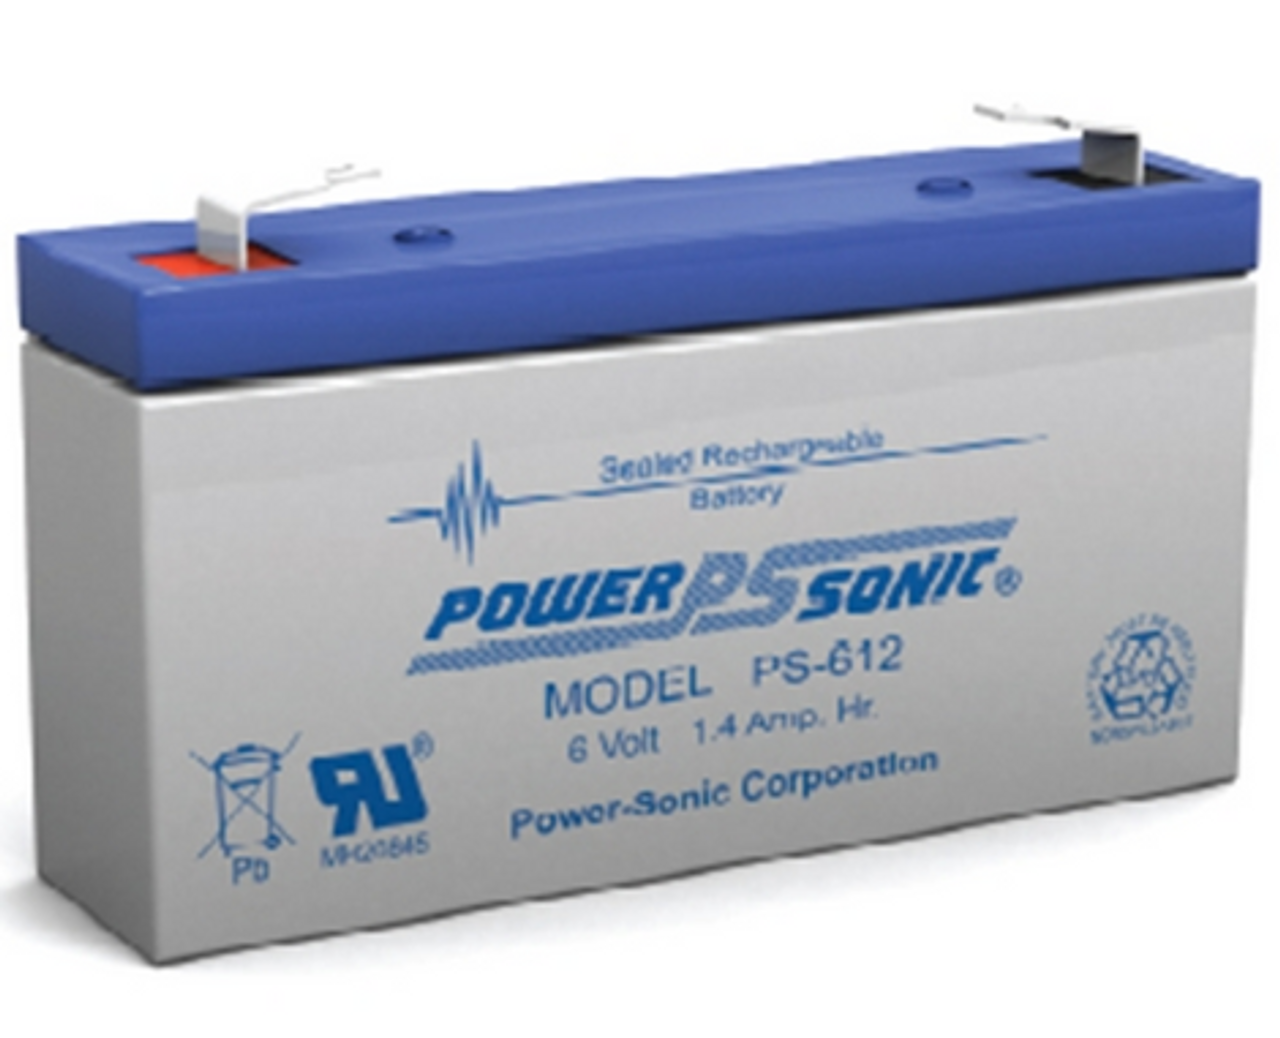 PS-612 F1 - Powersonic 6 Volt - 1.4Ah  SLA Battery F1